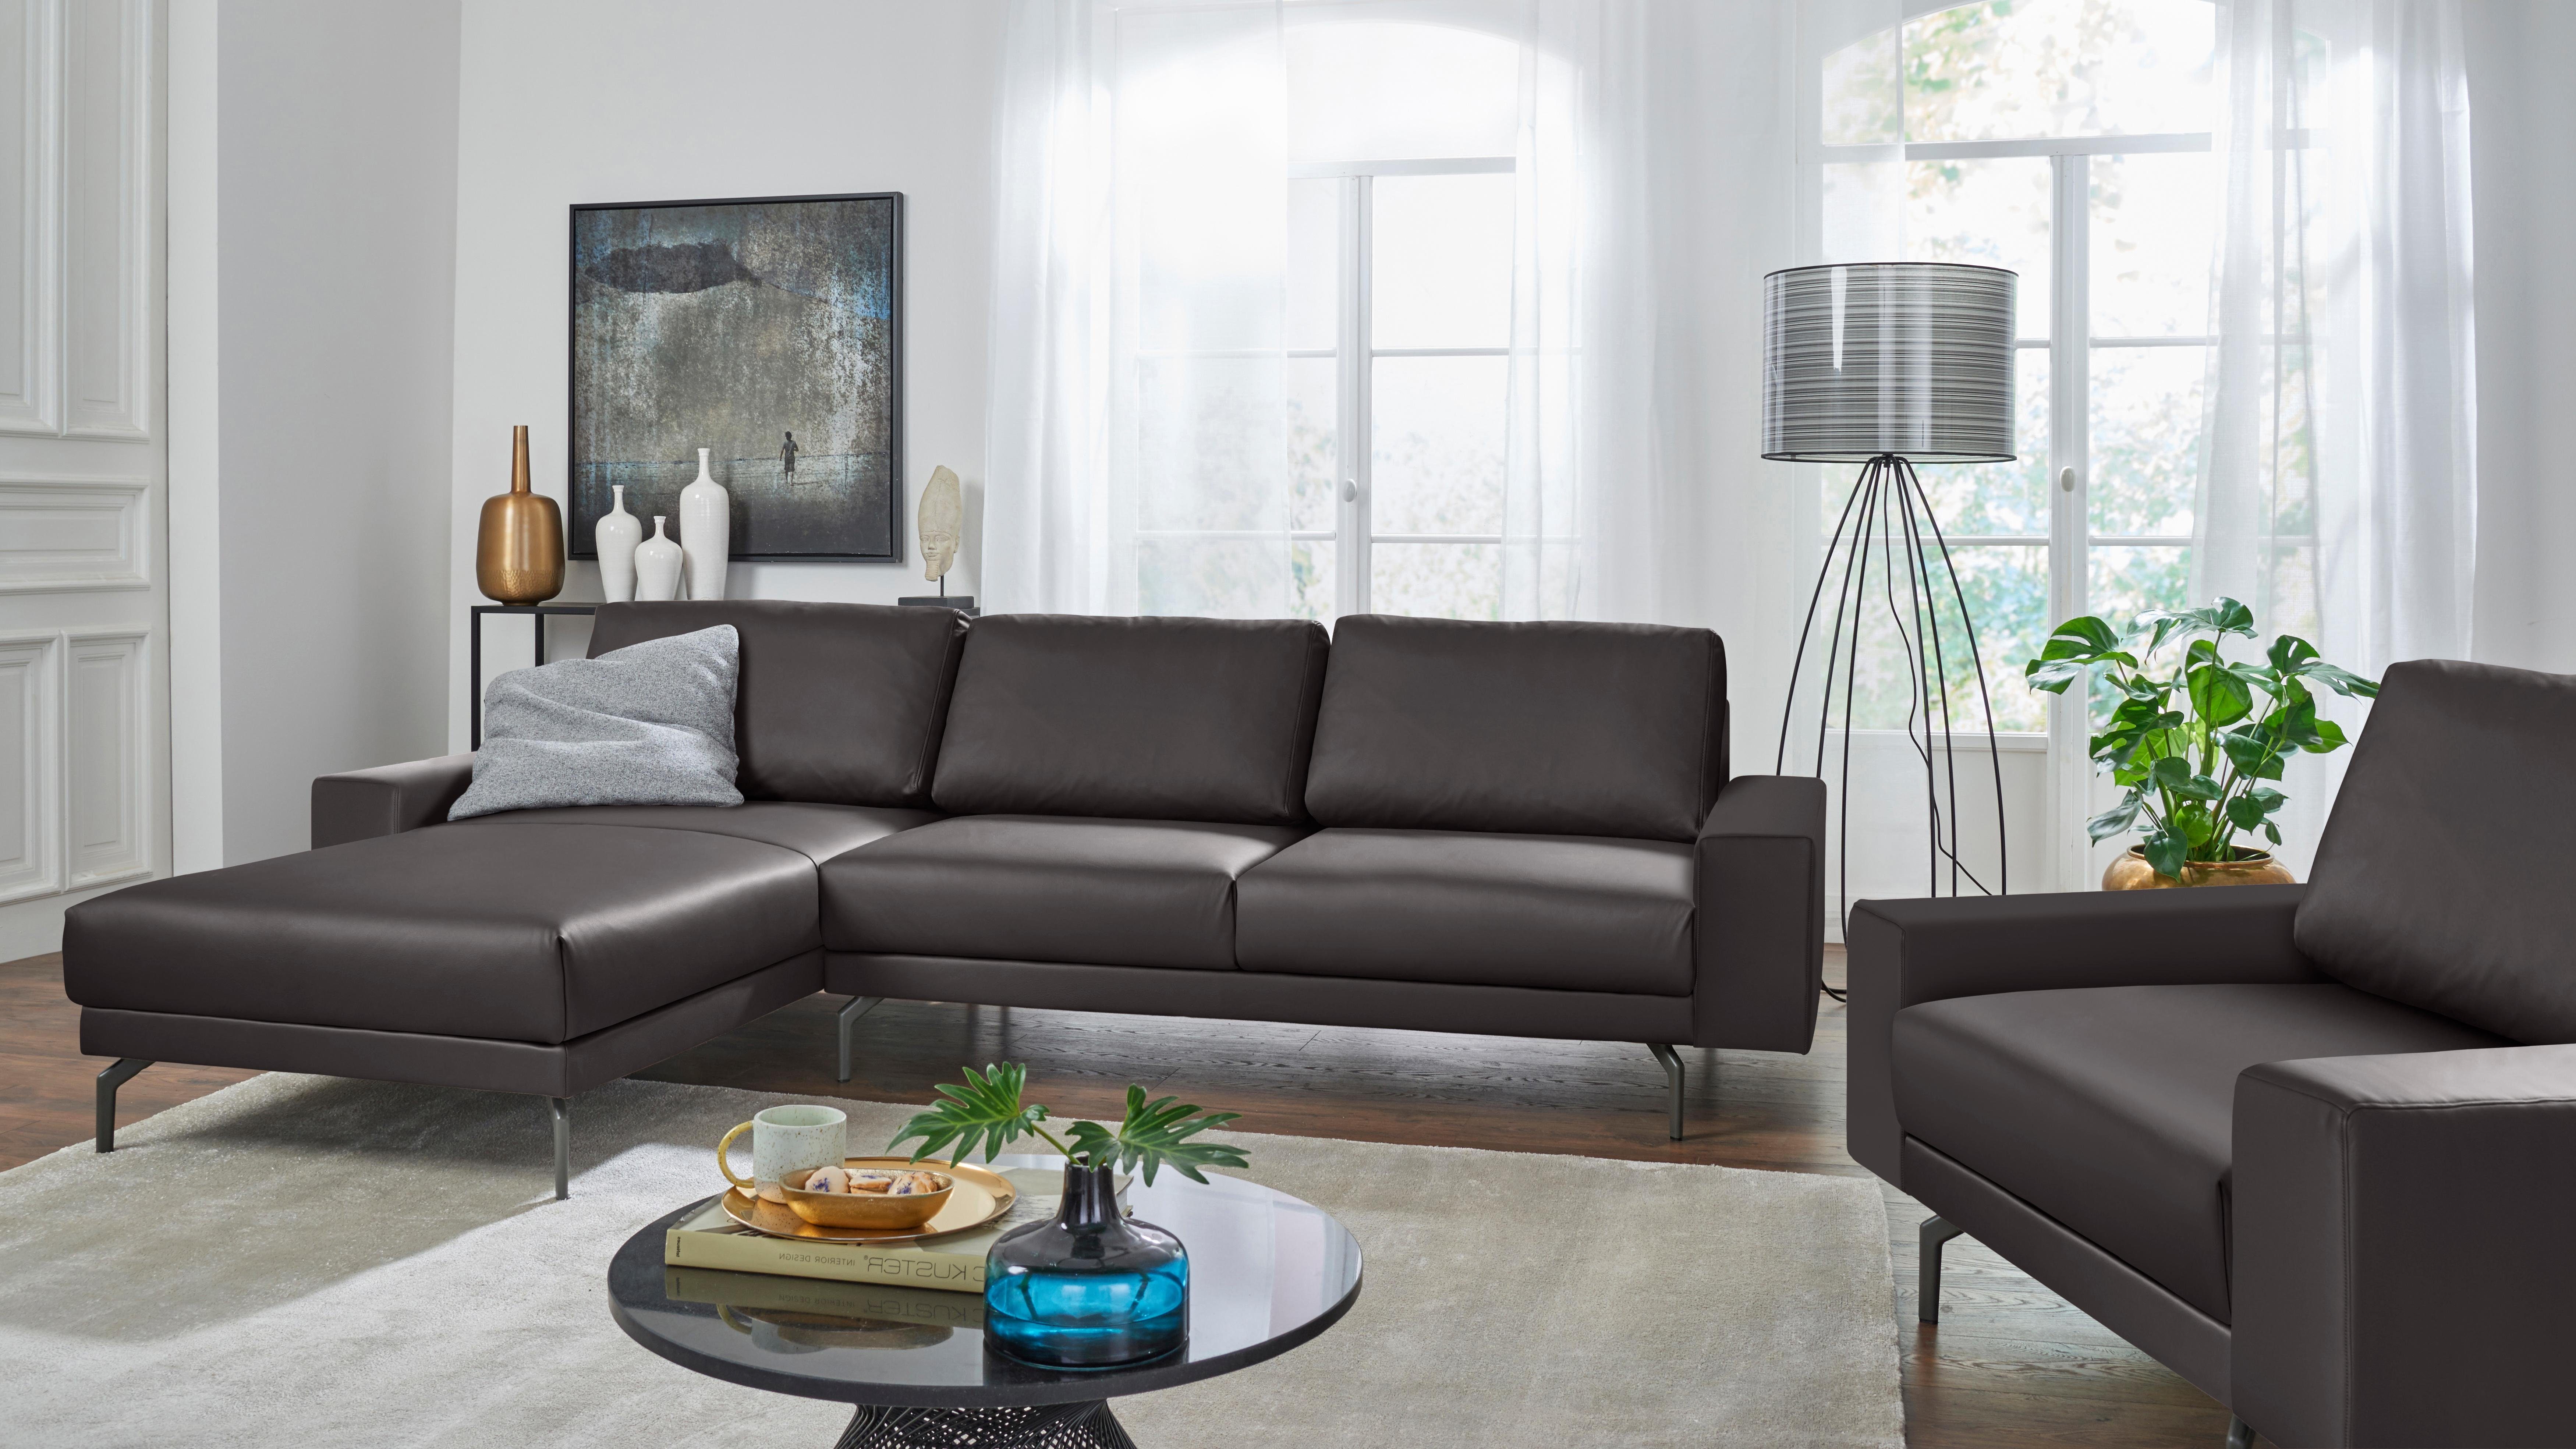 hülsta sofa Ecksofa hs.450, in umbragrau, und Armlehne niedrig, 274 Alugussfüße cm Breite breit